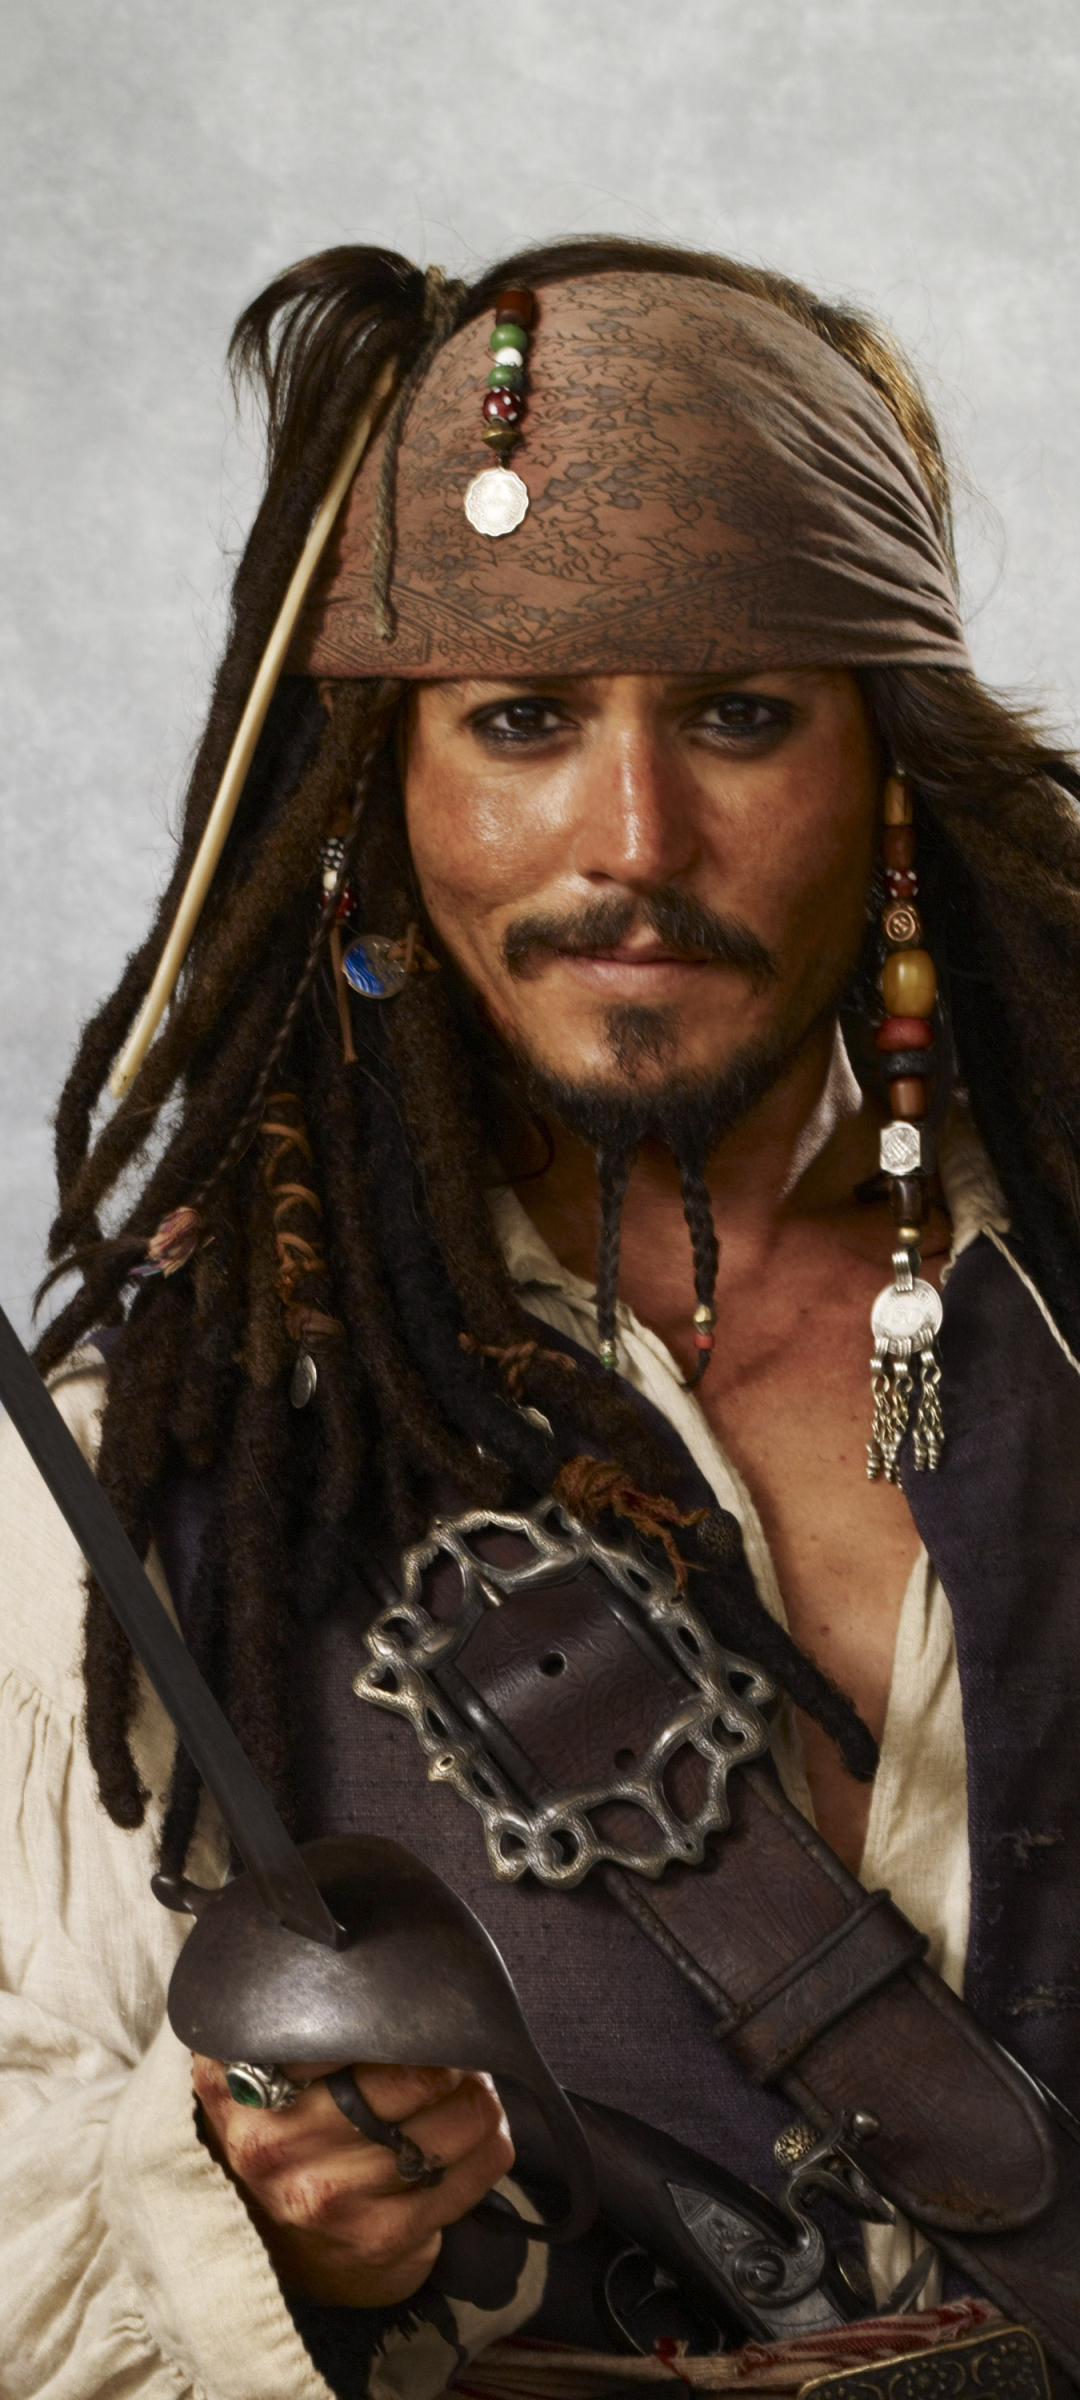 Descarga gratuita de fondo de pantalla para móvil de Piratas Del Caribe, Johnny Depp, Gorrión, Barba, Pelo Largo, Pirata, Películas, Actor.